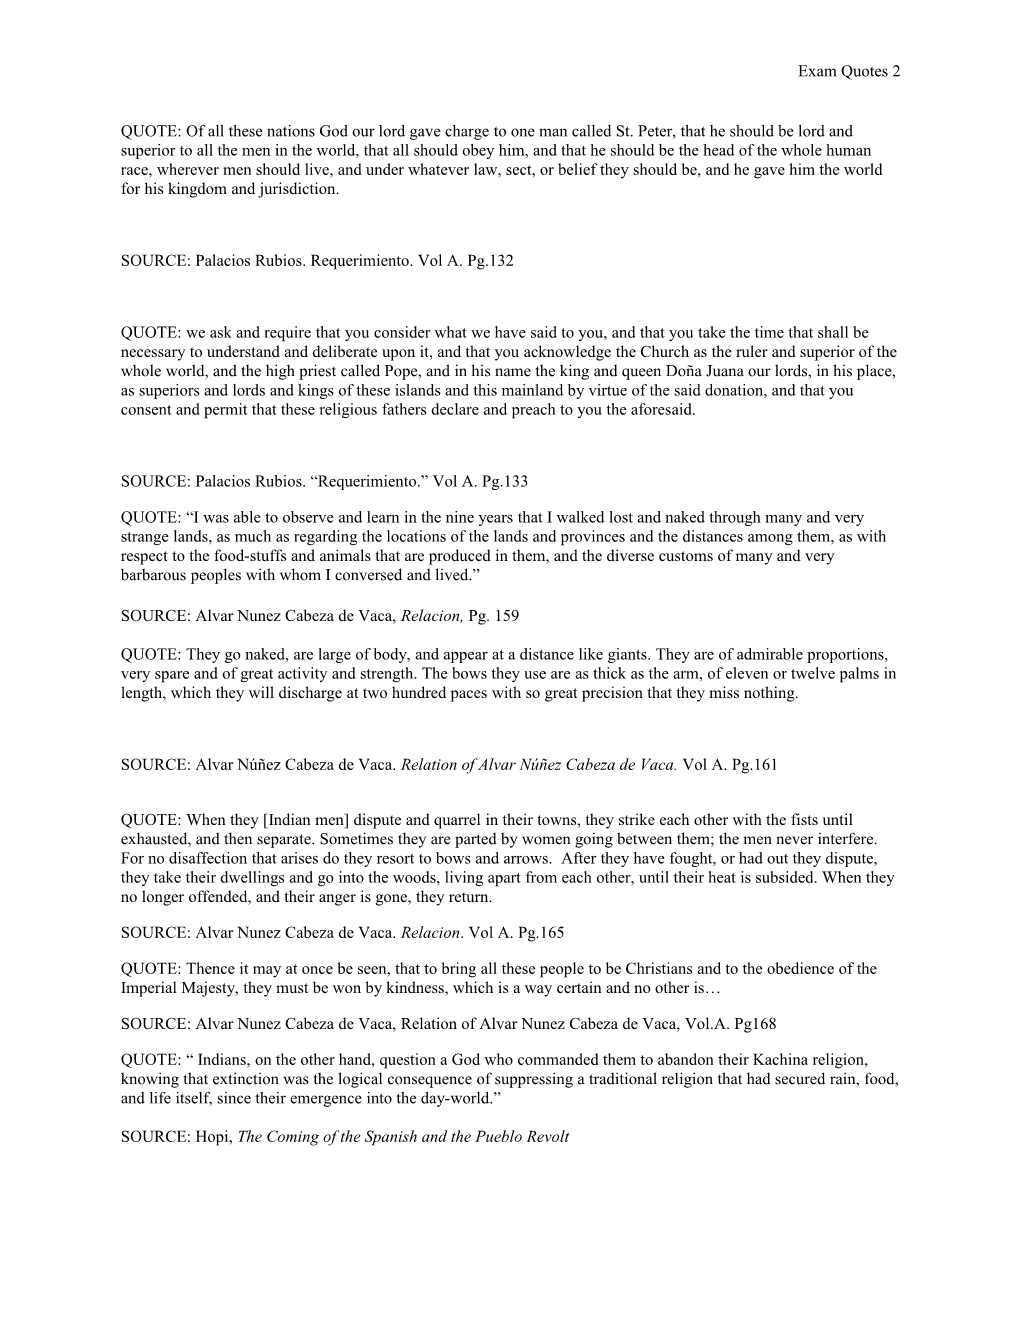 Midterm Exam Potential Quotations List Spring 2011 Dr. Halbert